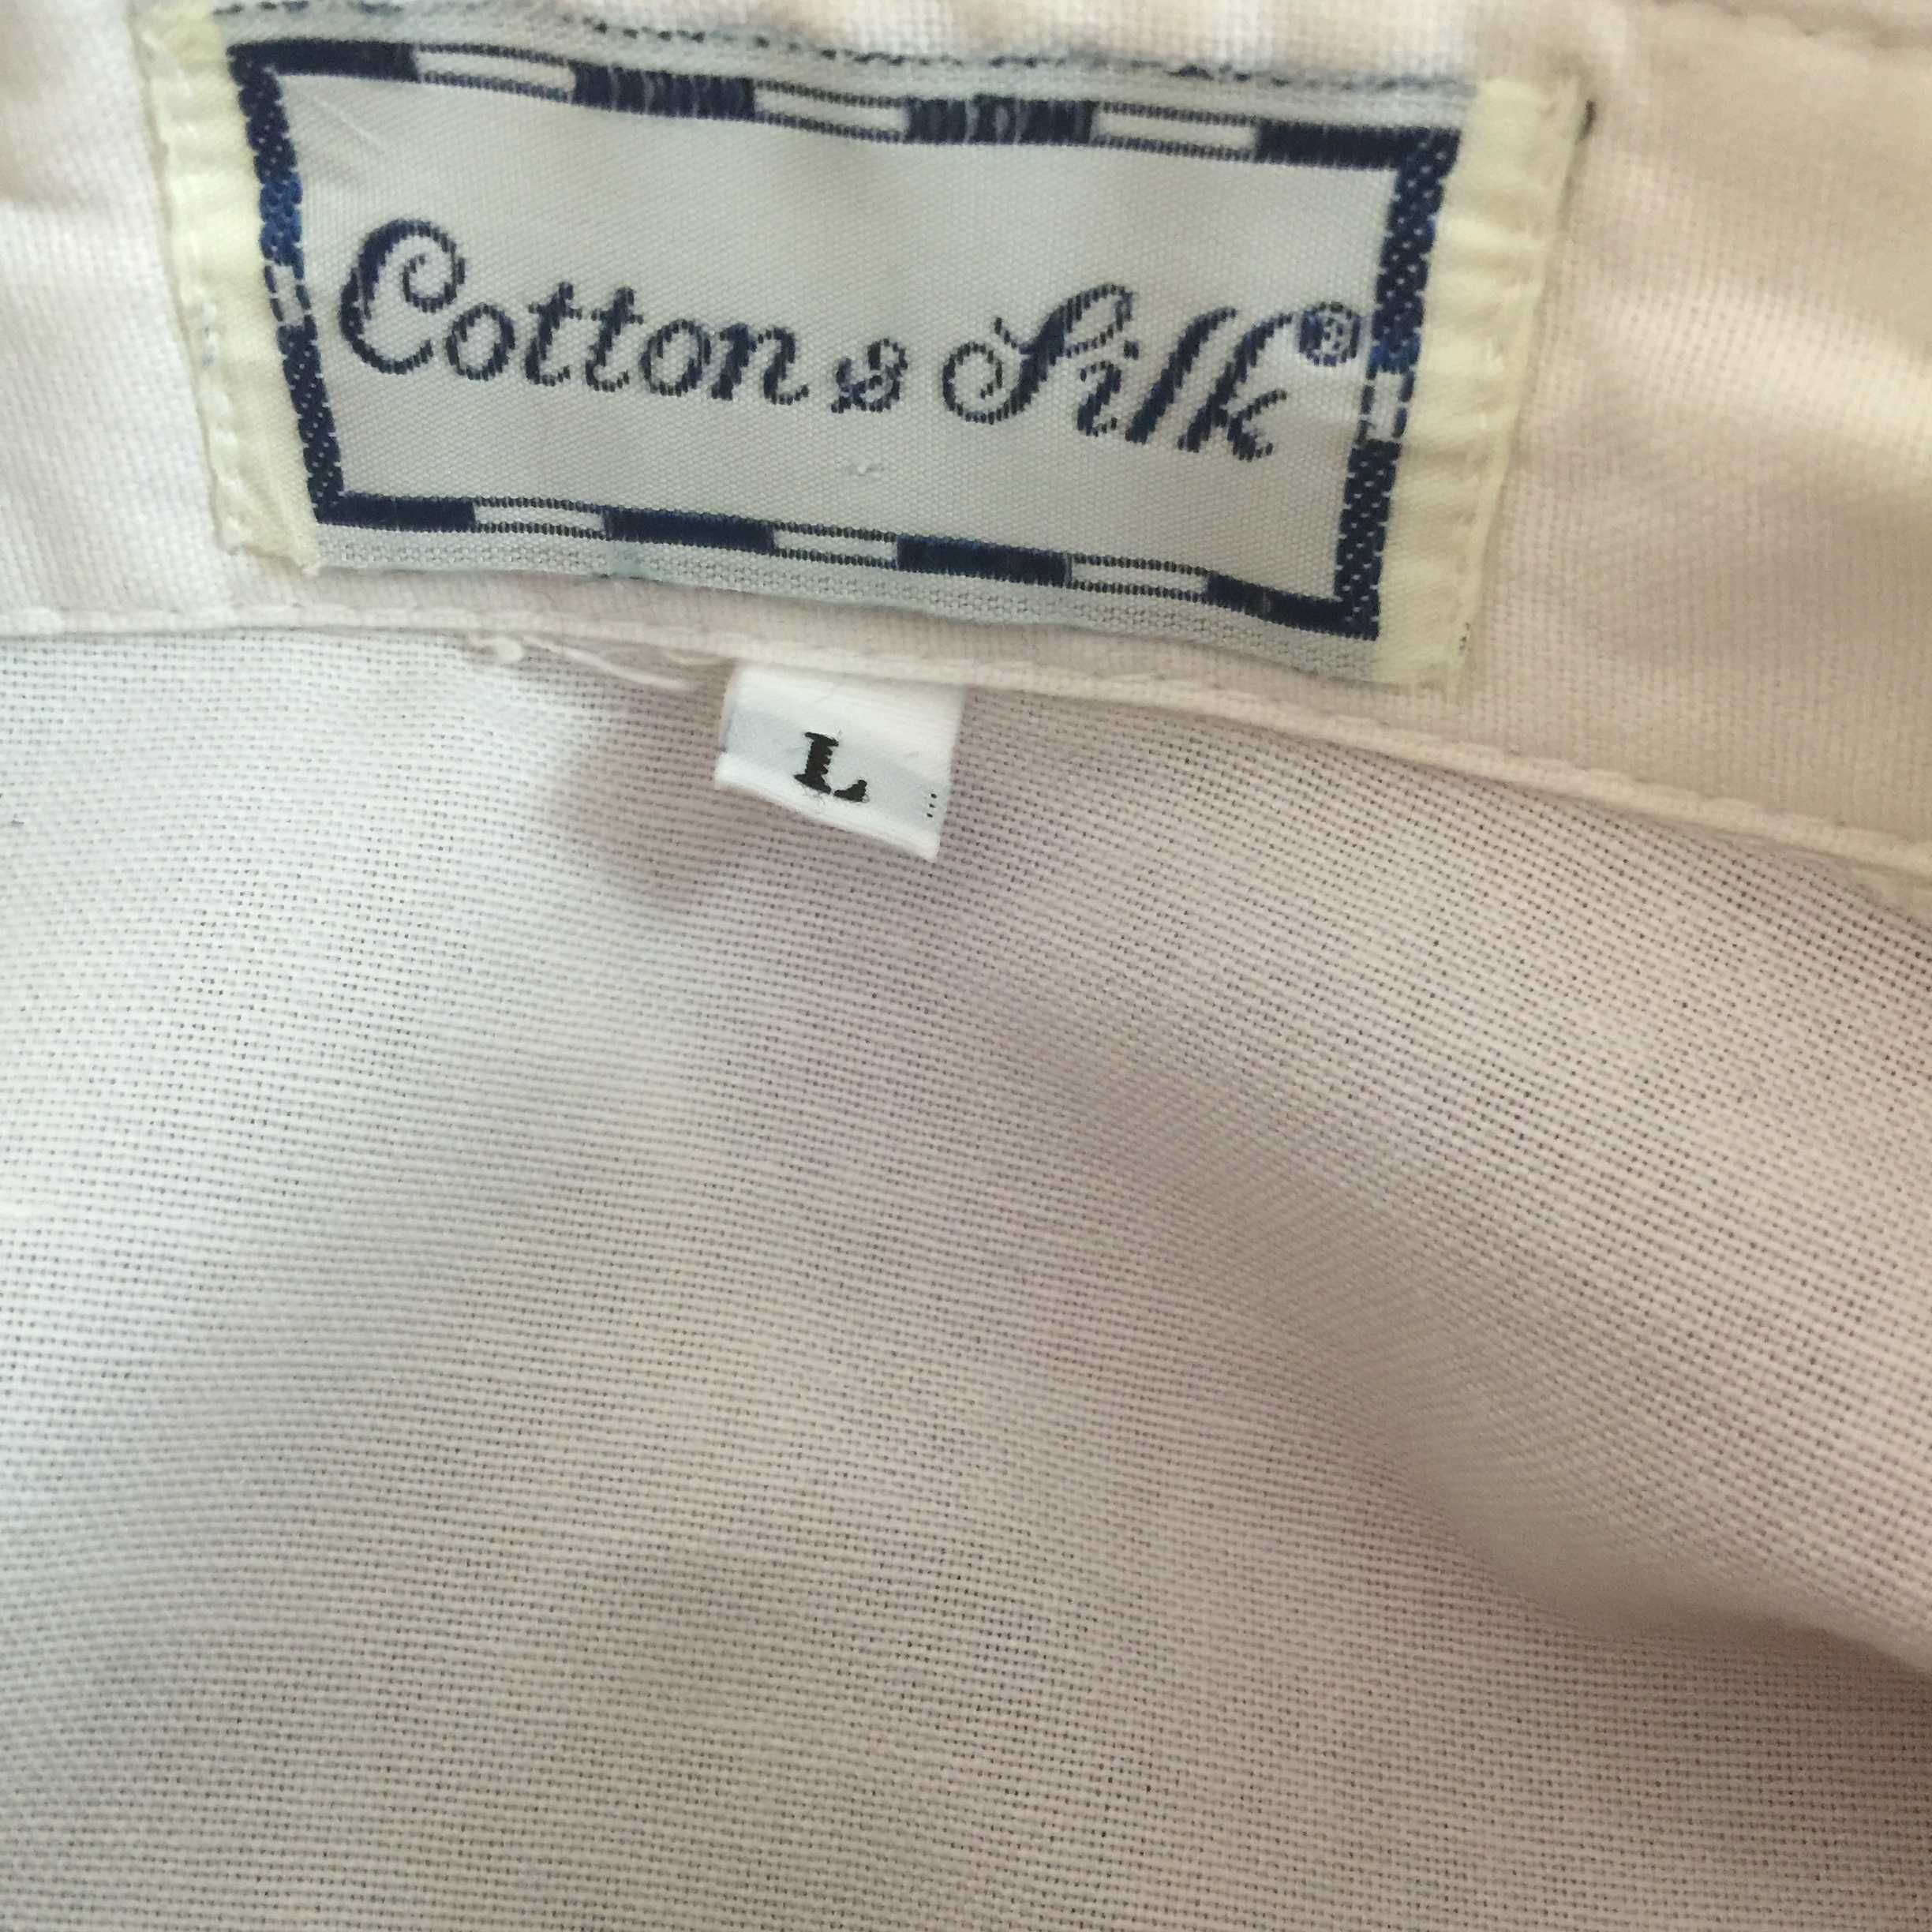 Белая блузка с коротким рукавом Cotton & Silk Италия б/у 100% коттон